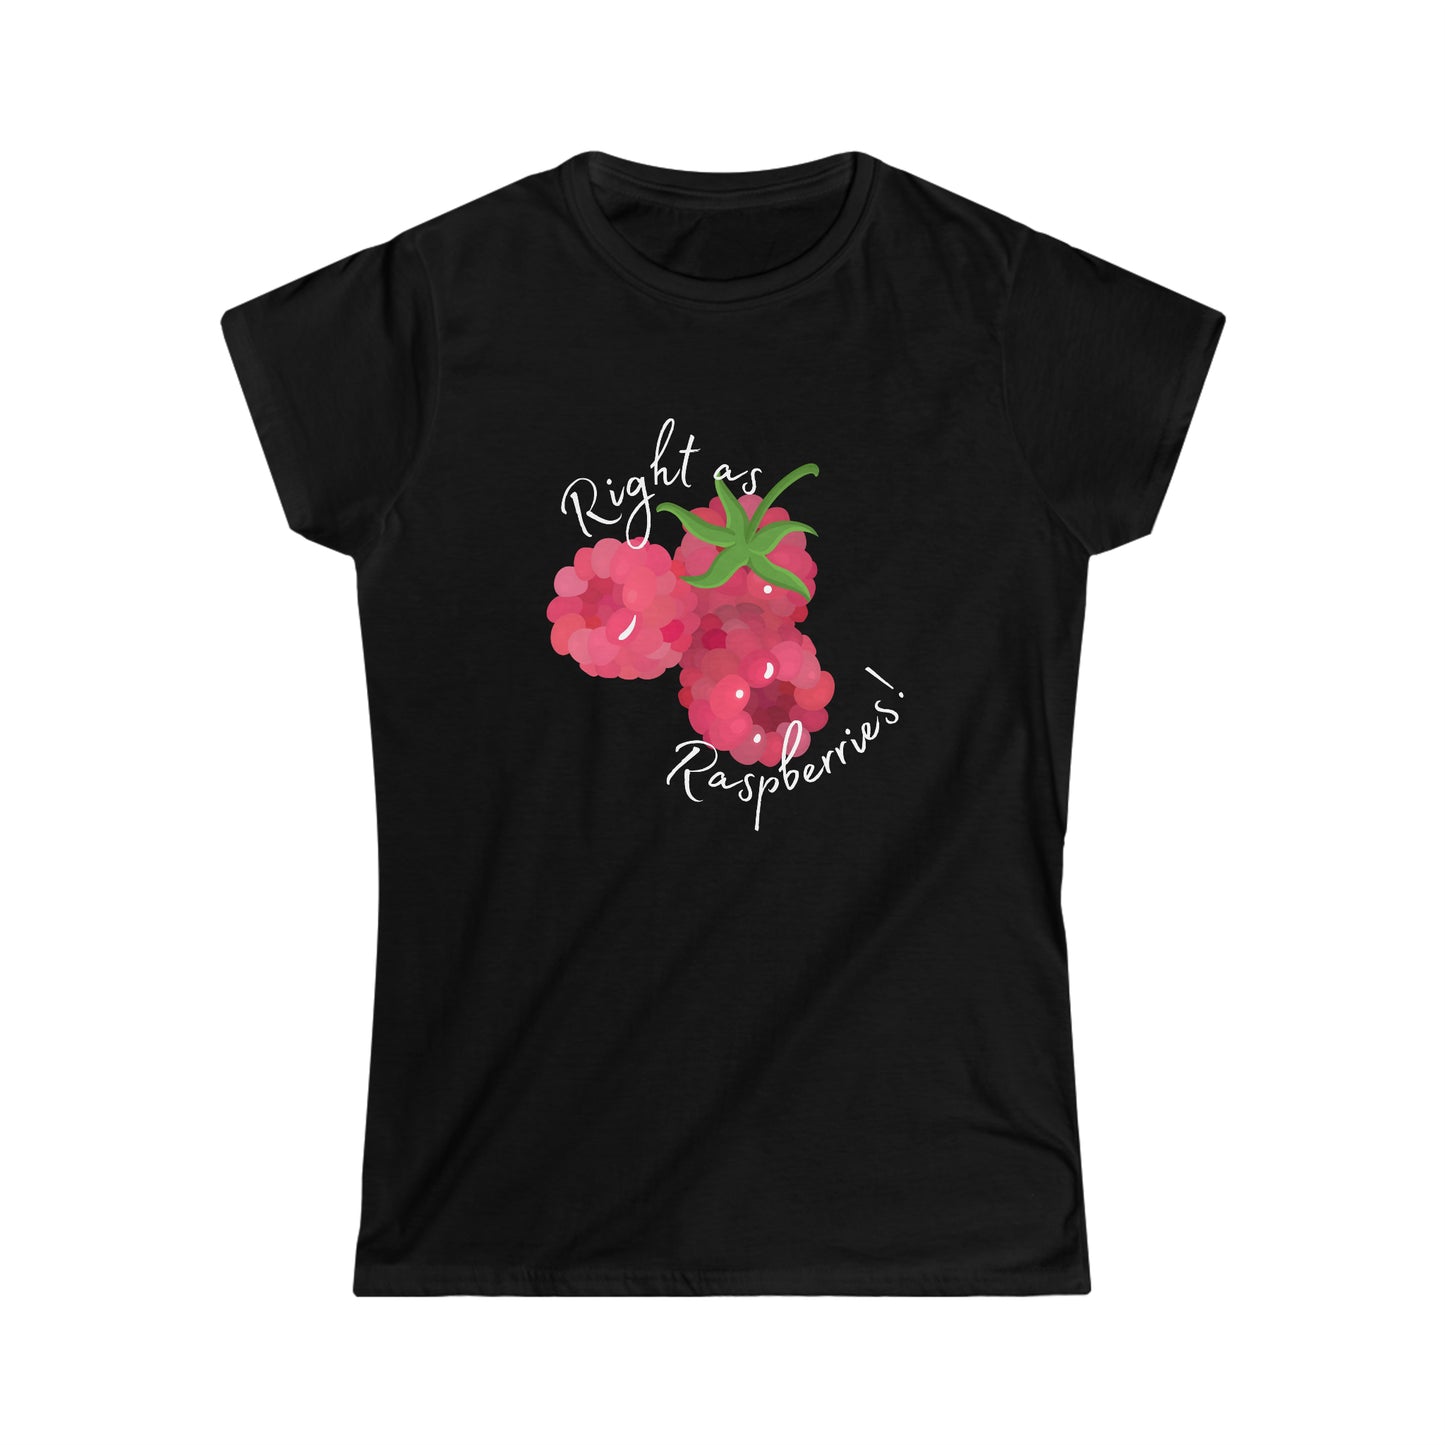 Right as Raspberries: T-Shirt